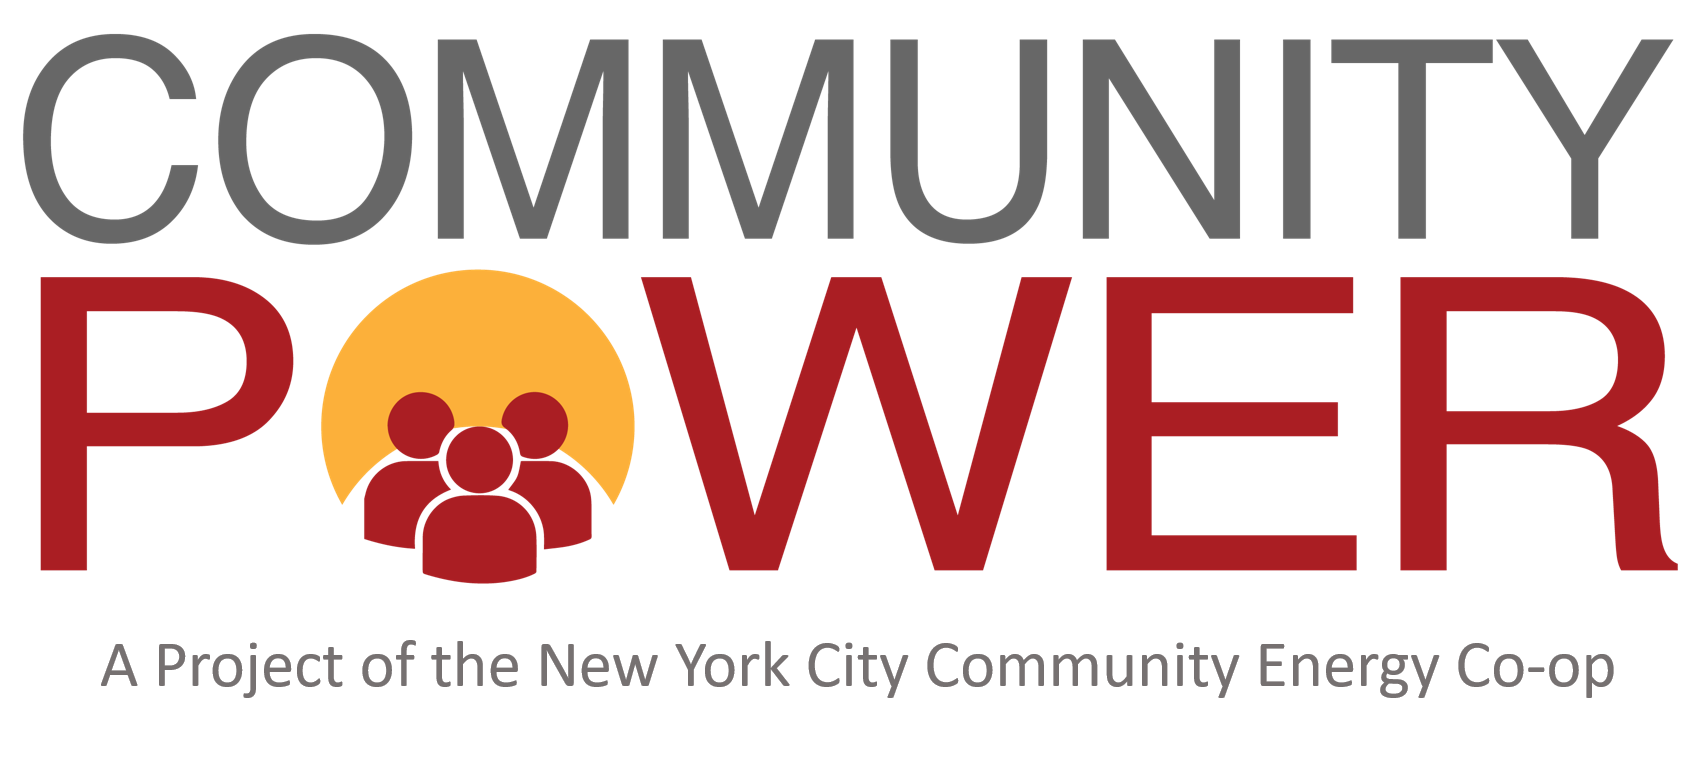 Community Power